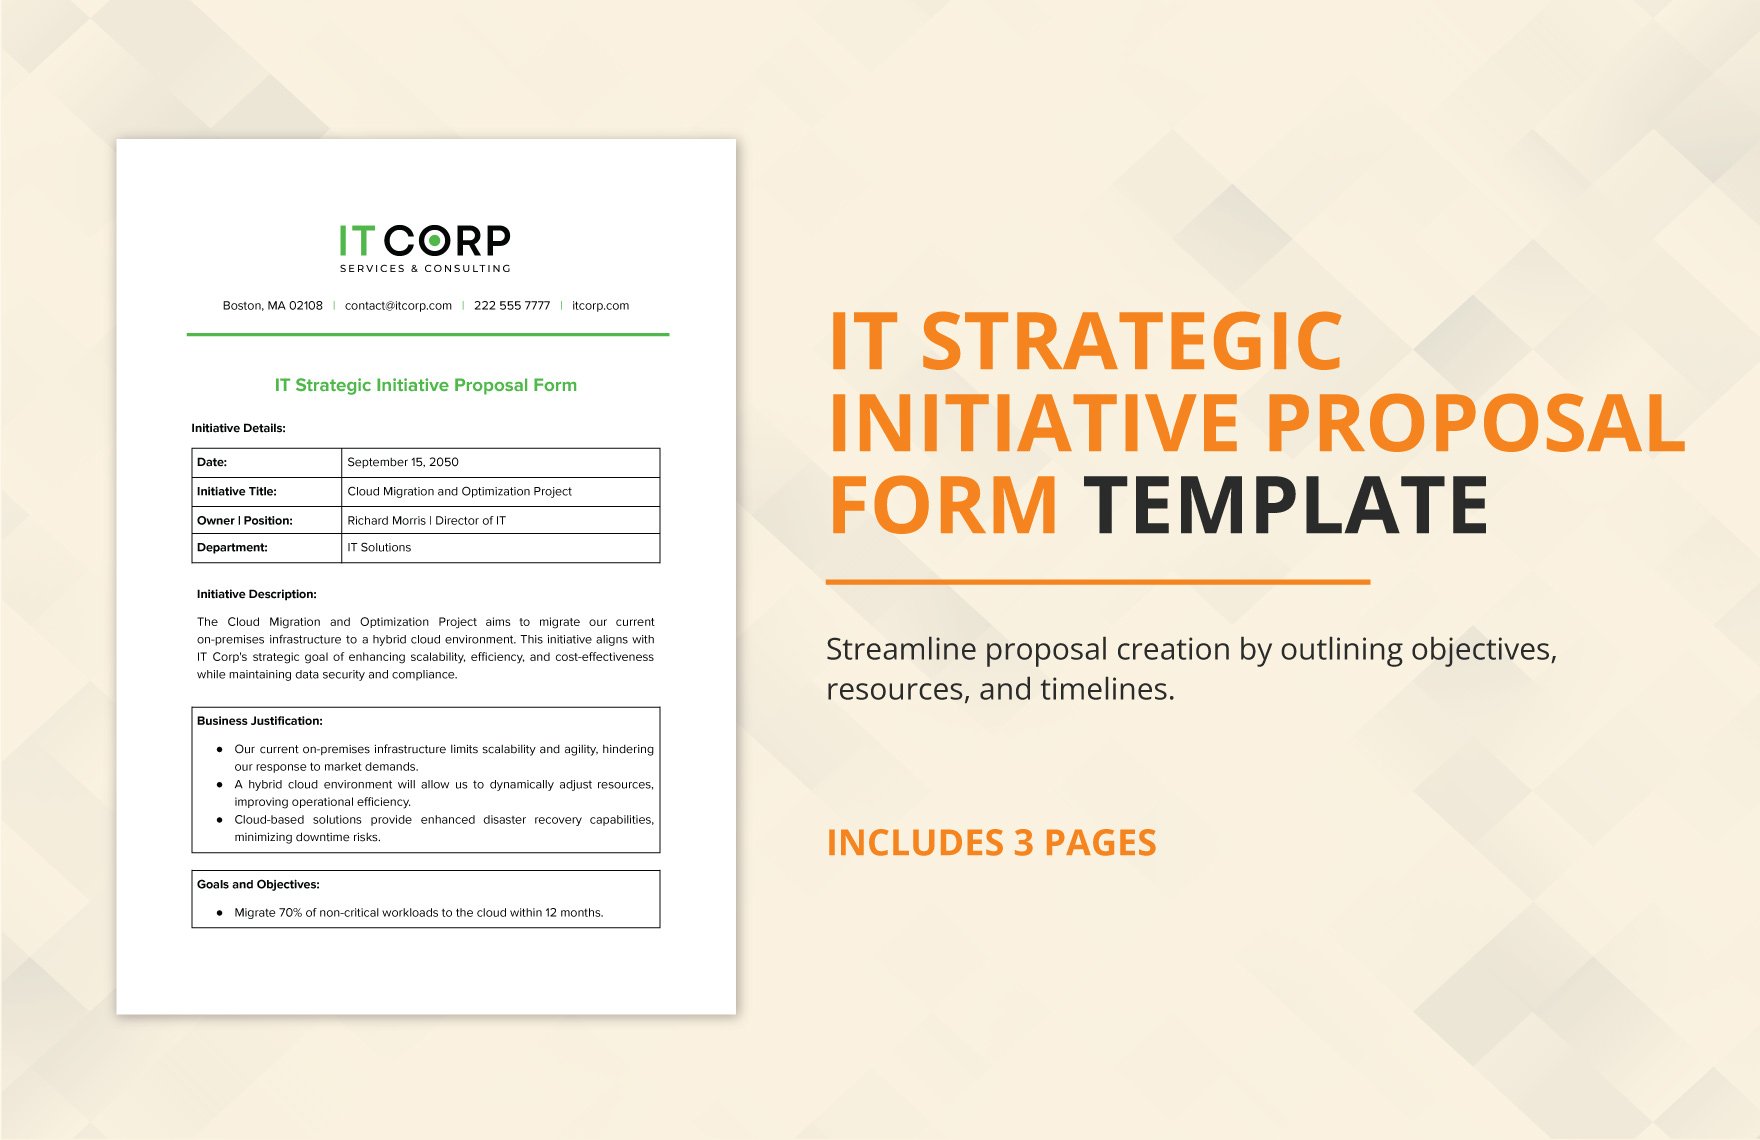 IT Strategic Initiative Proposal Form Template